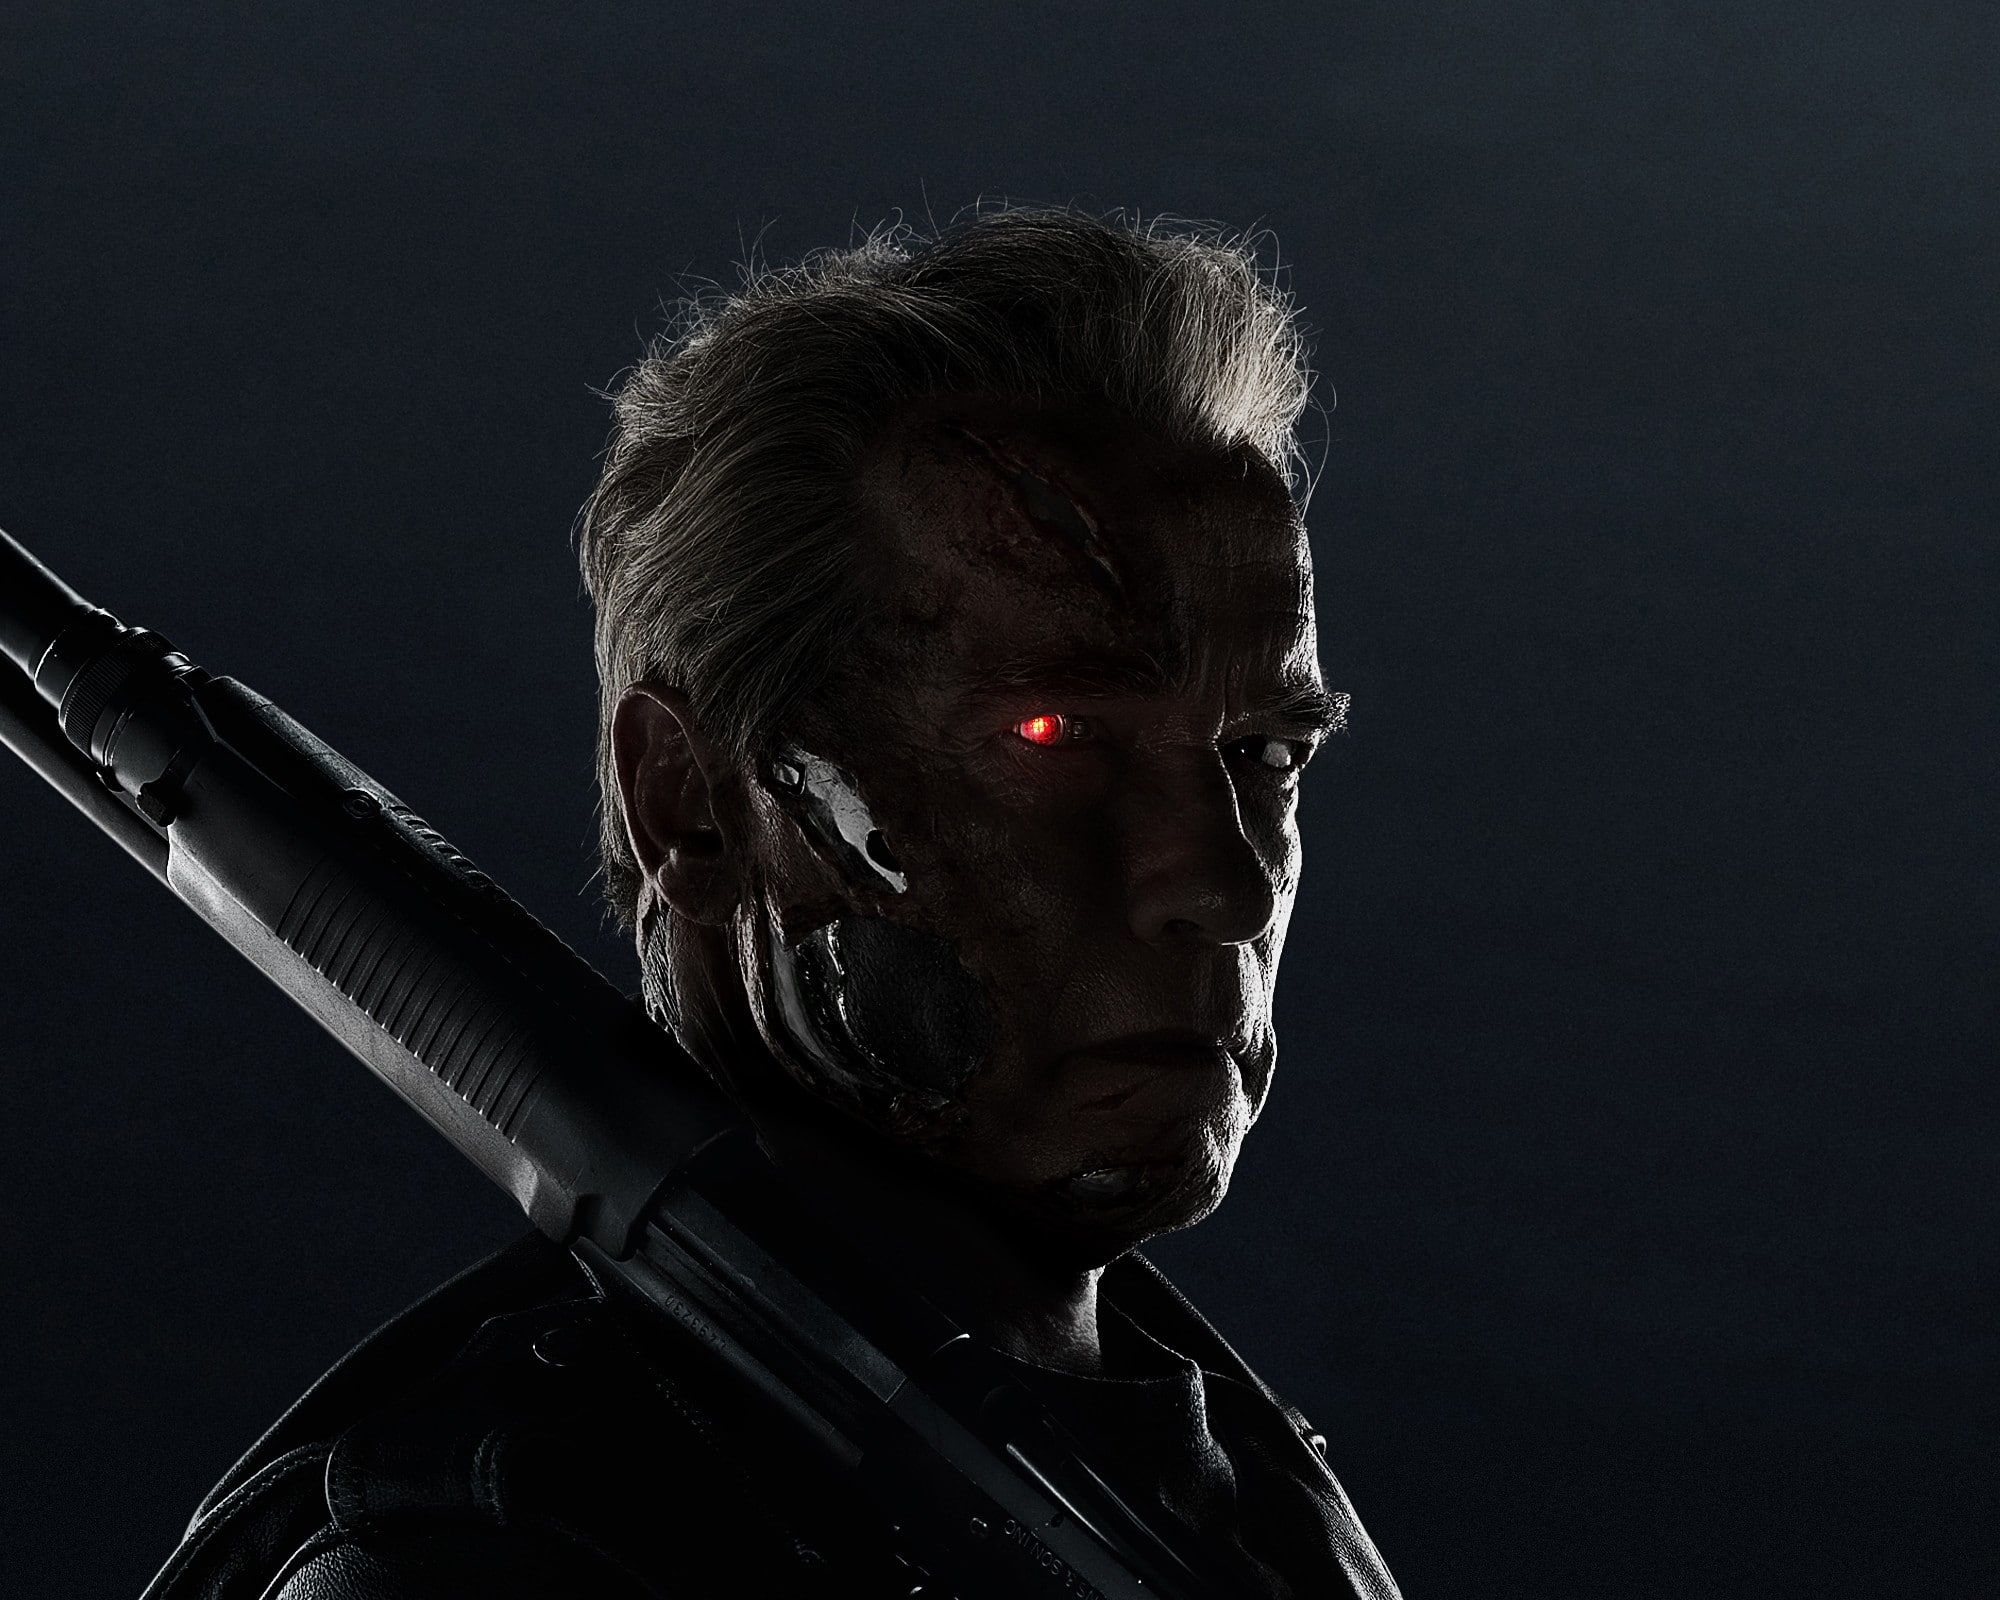 Red Eyes #T 800 Terminator Genisys #weapon Arnold Schwarzenegger #Terminator #movies #cyborg P #wallpa. Terminator Genisys, Terminator, Arnold Schwarzenegger